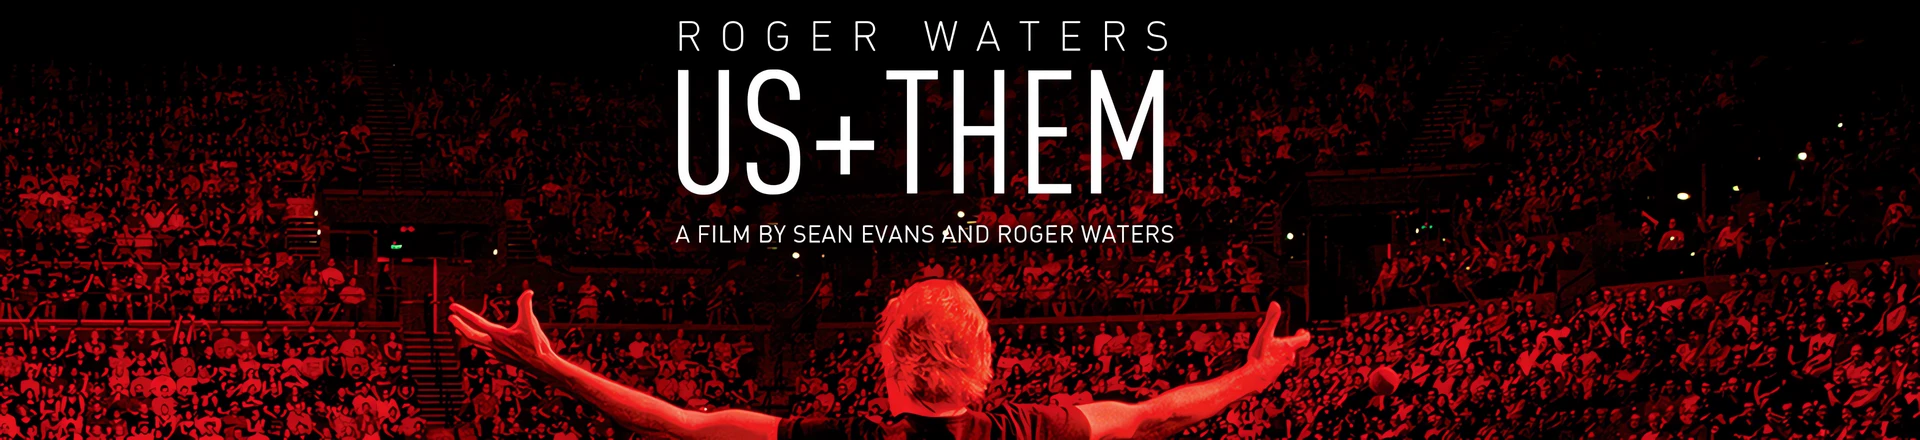 Film ROGER WATERS: US + THEM już dostępny